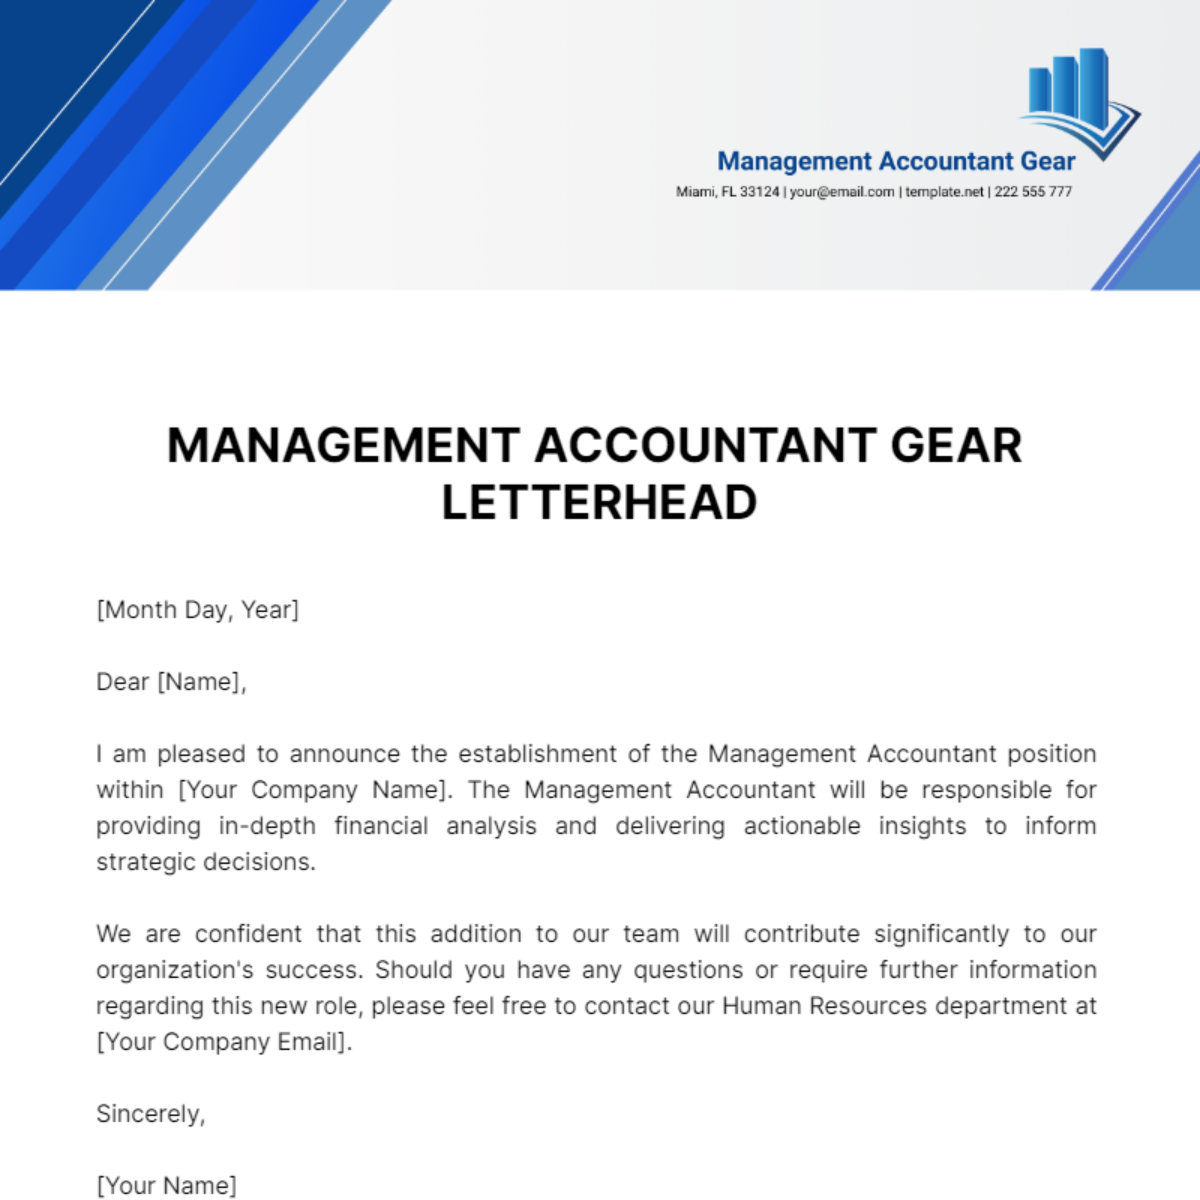 Management Accountant Gear Letterhead Template